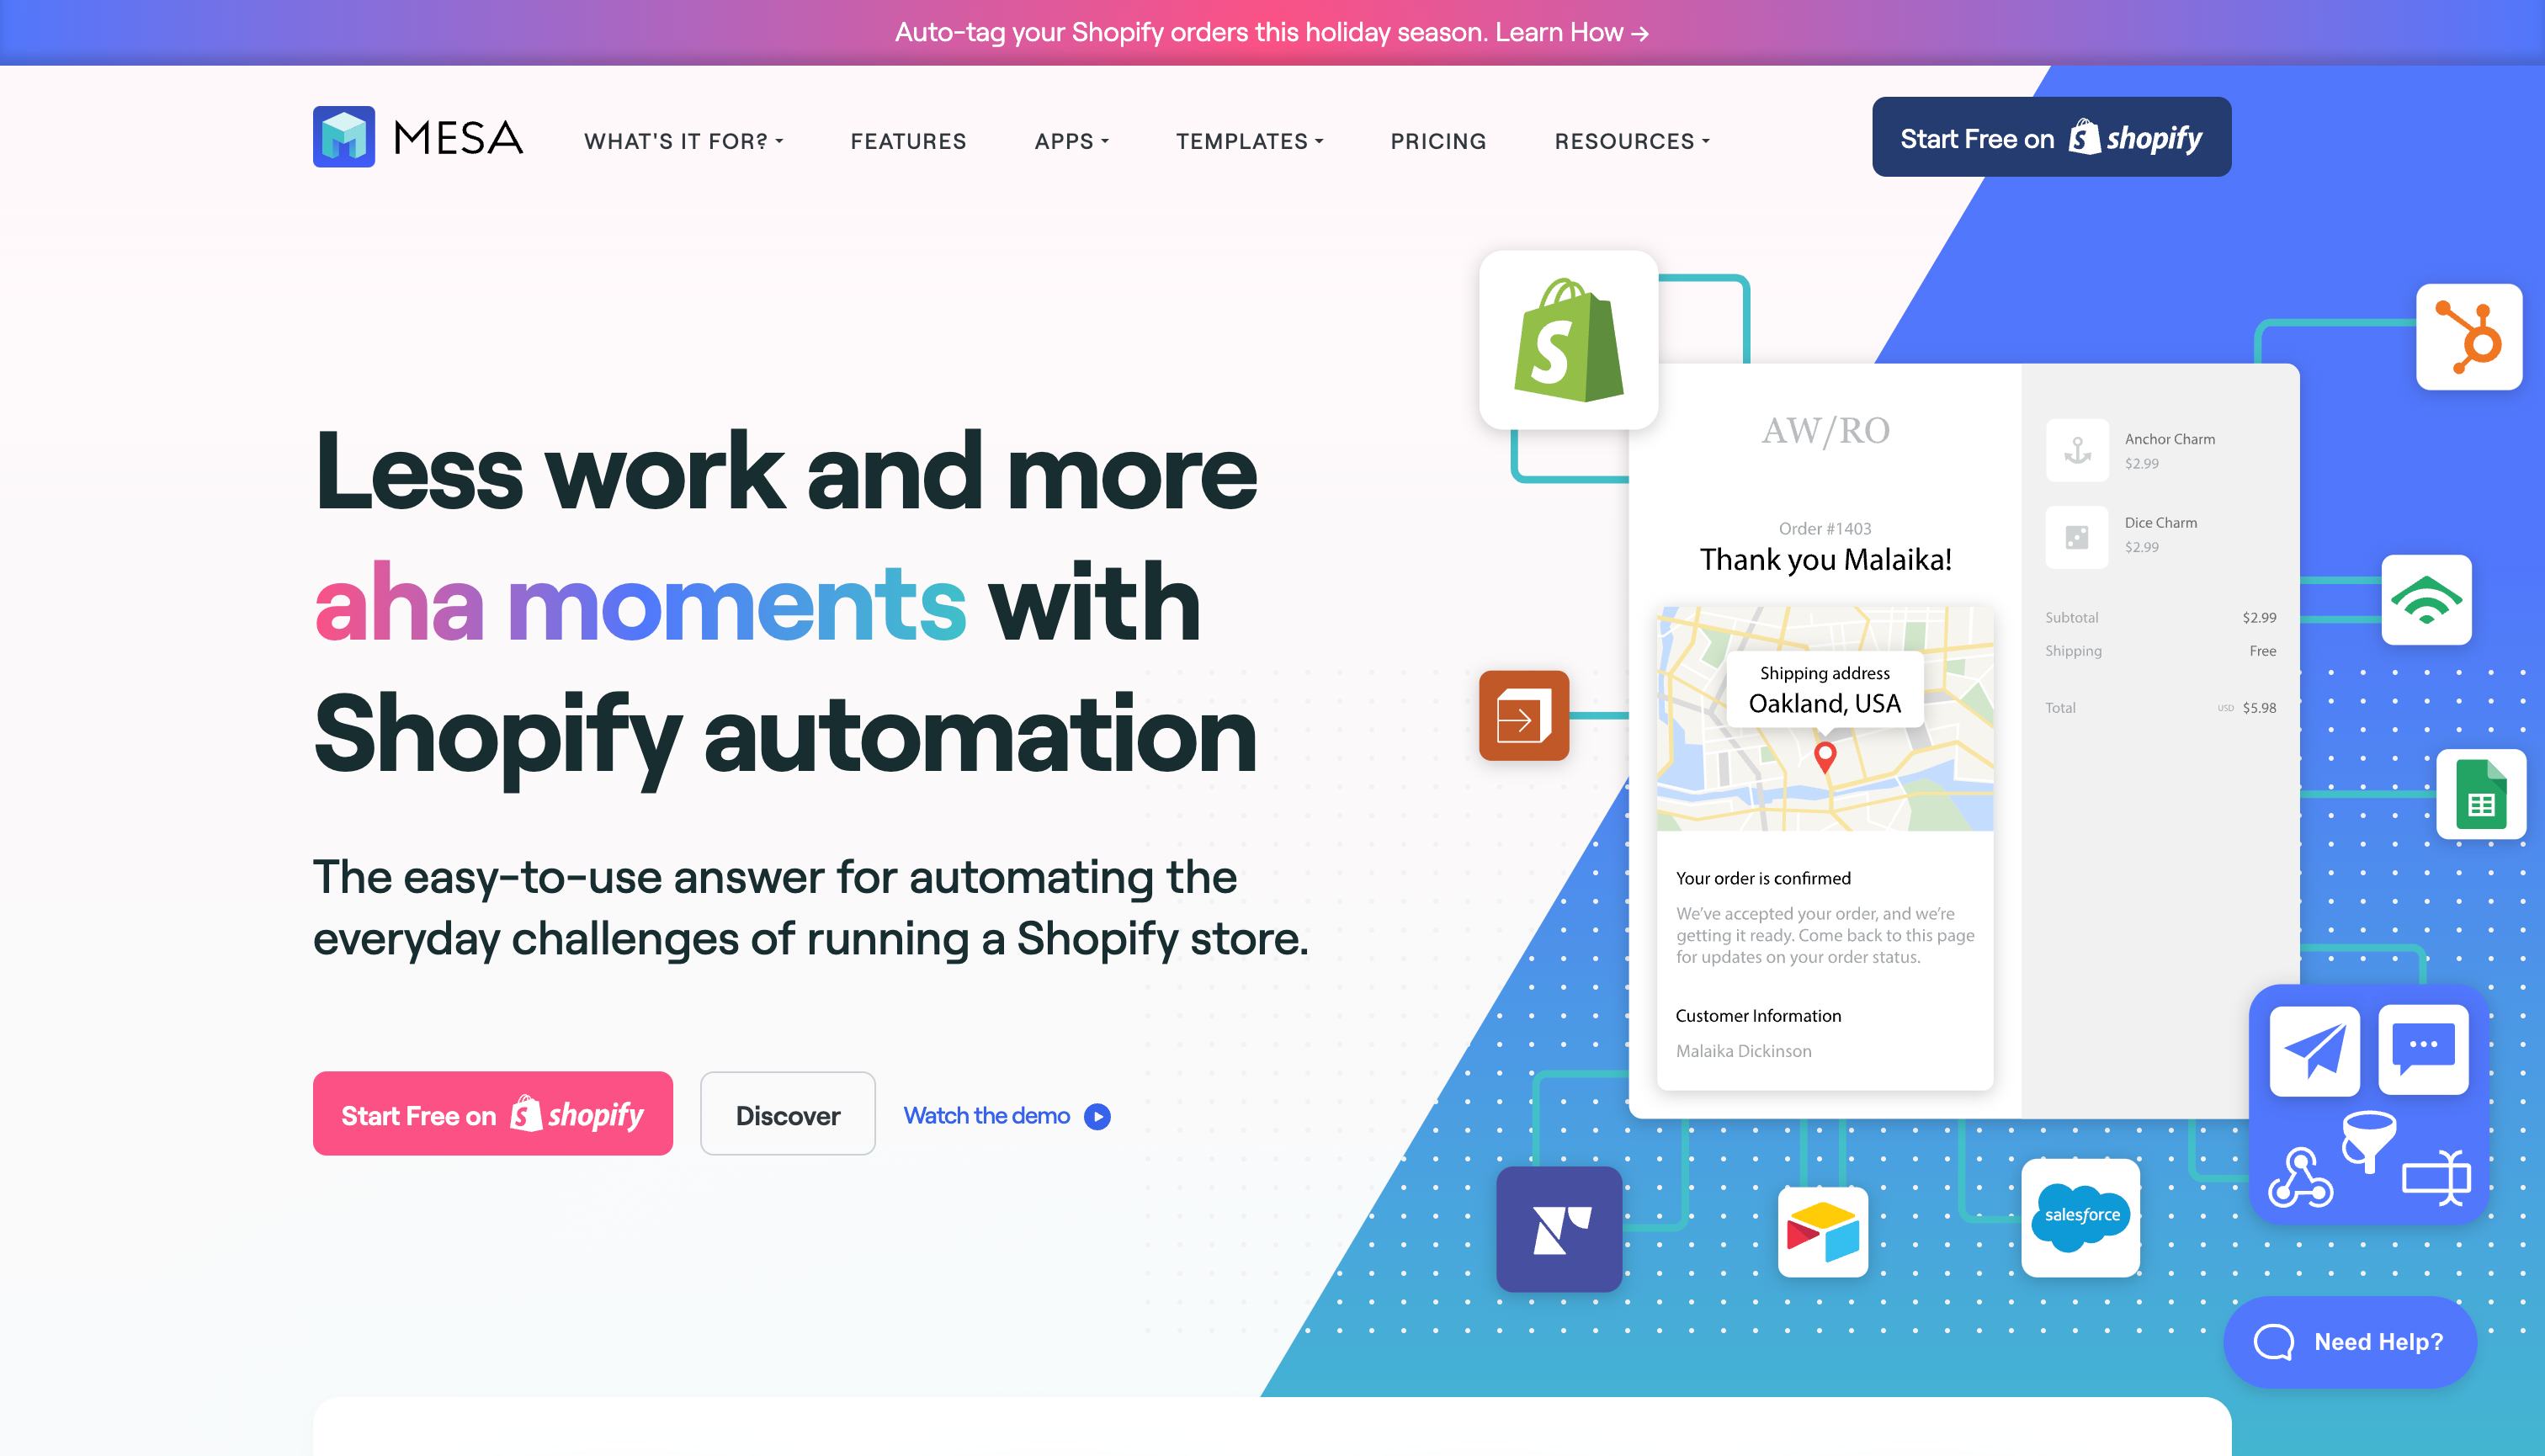 MESA - Shopify automation